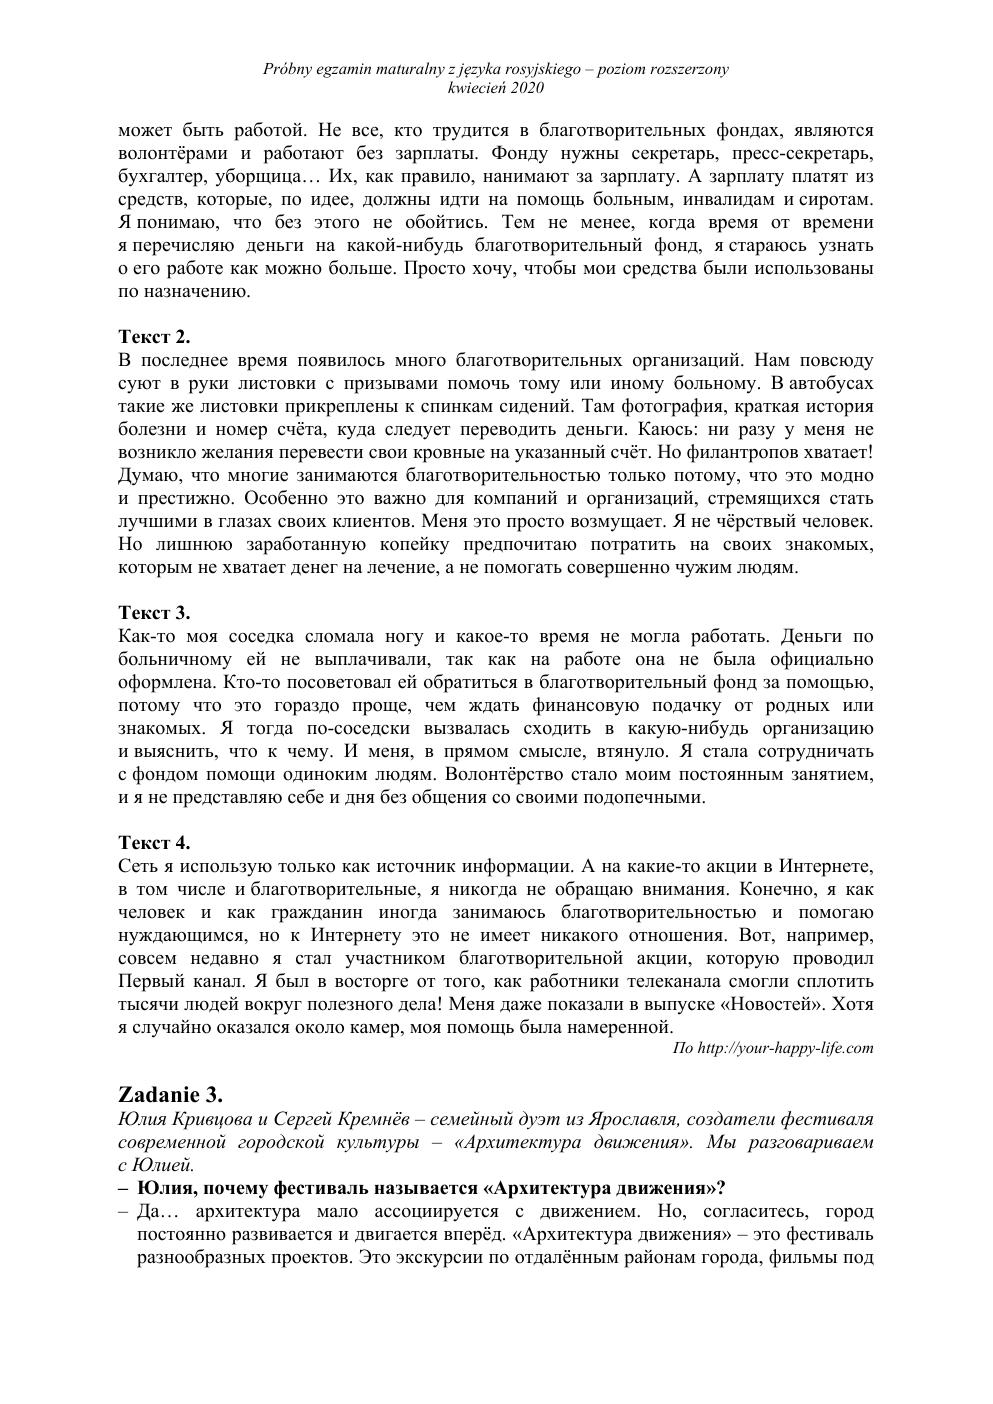 transkrypcja - rosyjski rozszerzony - matura 2020 próbna-2